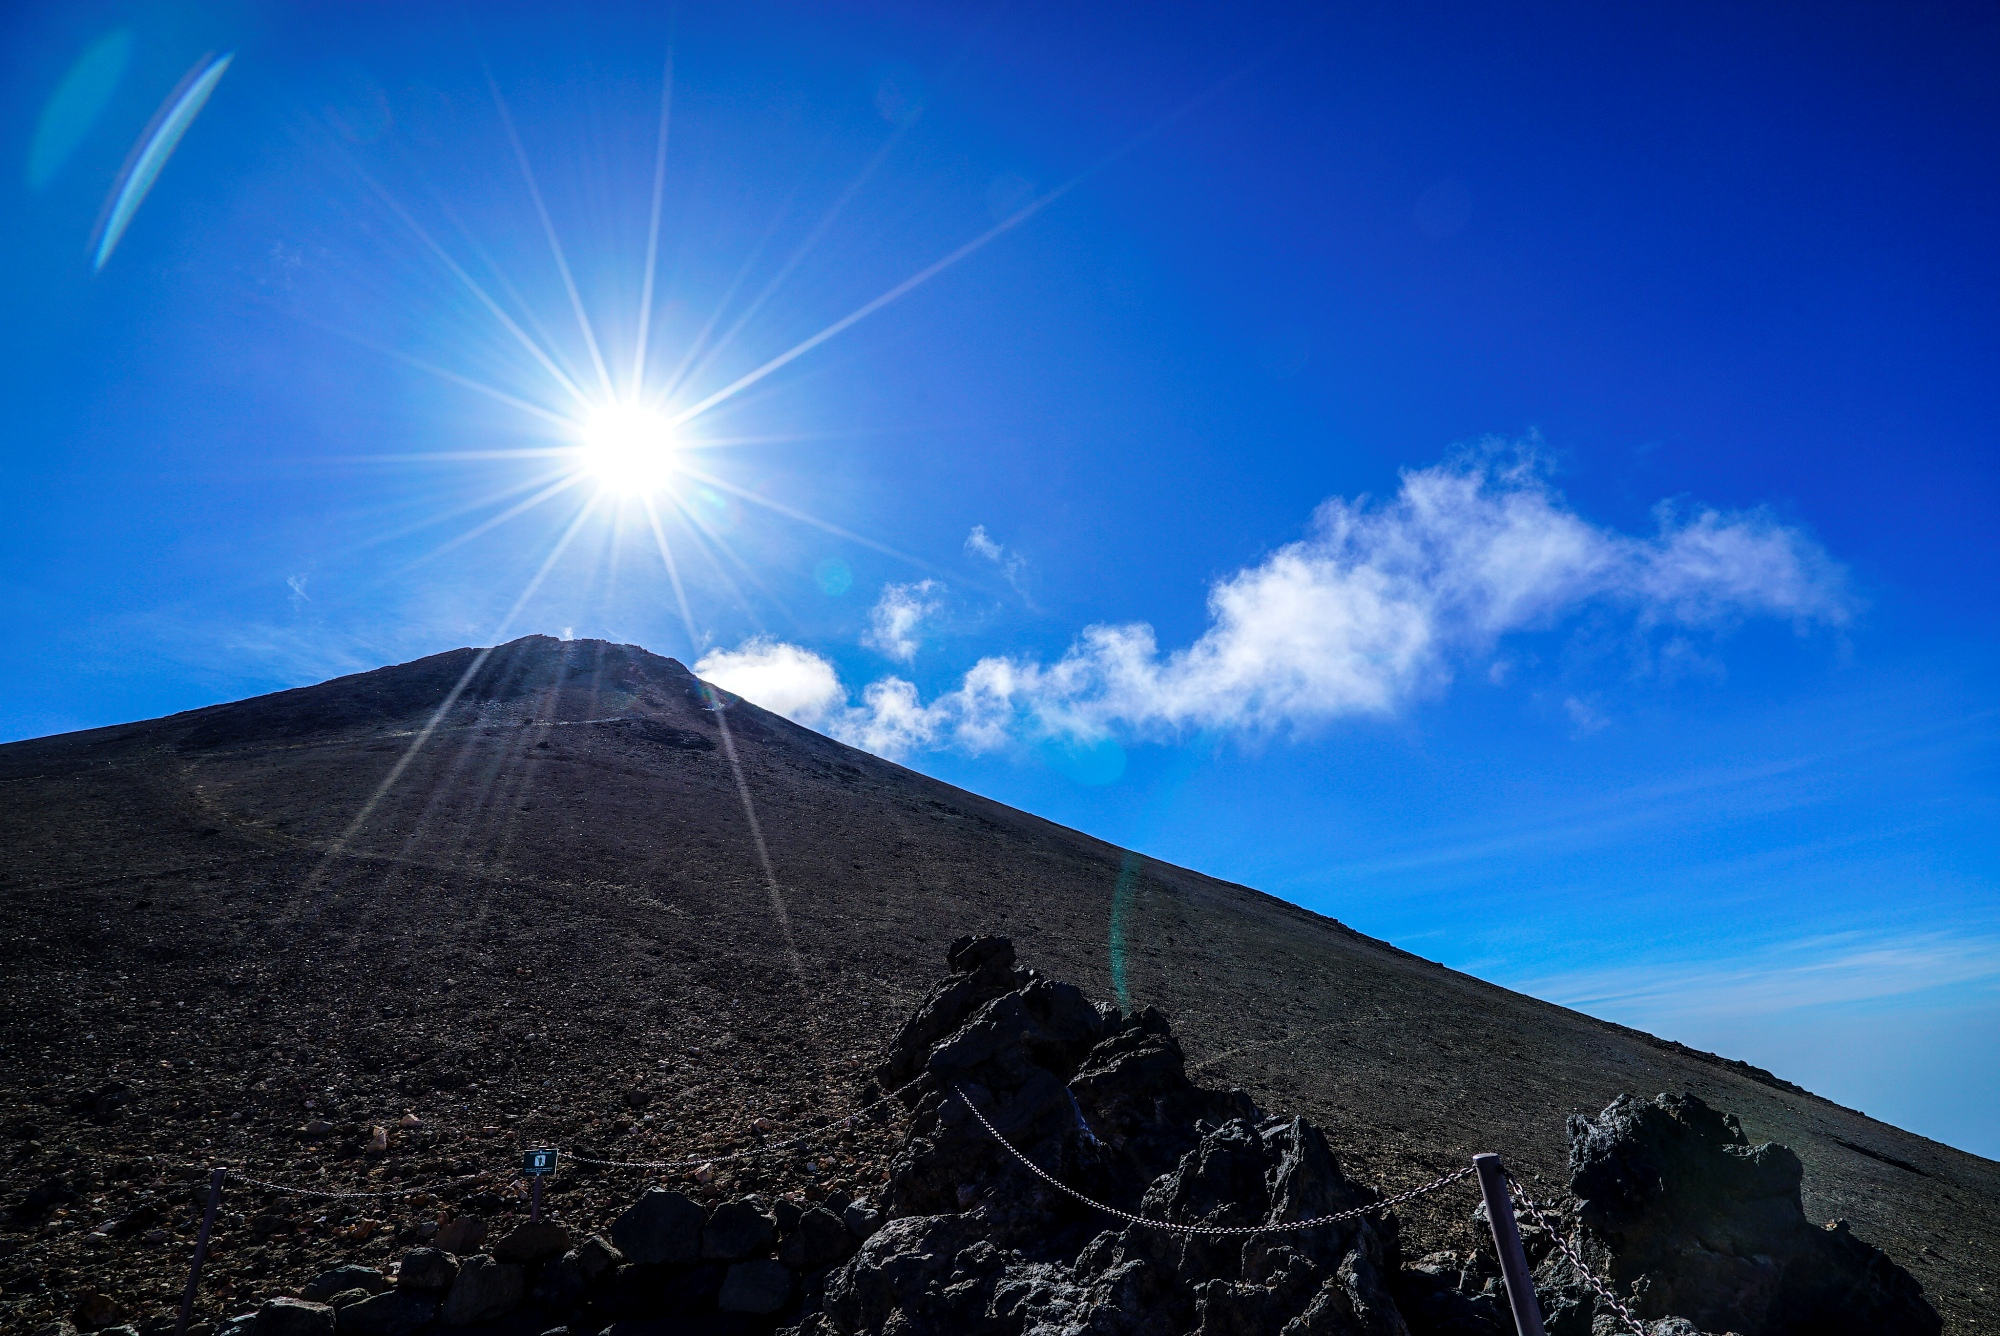 Der Gipfelaufbau des Pico del Teide vom Mirador aus.